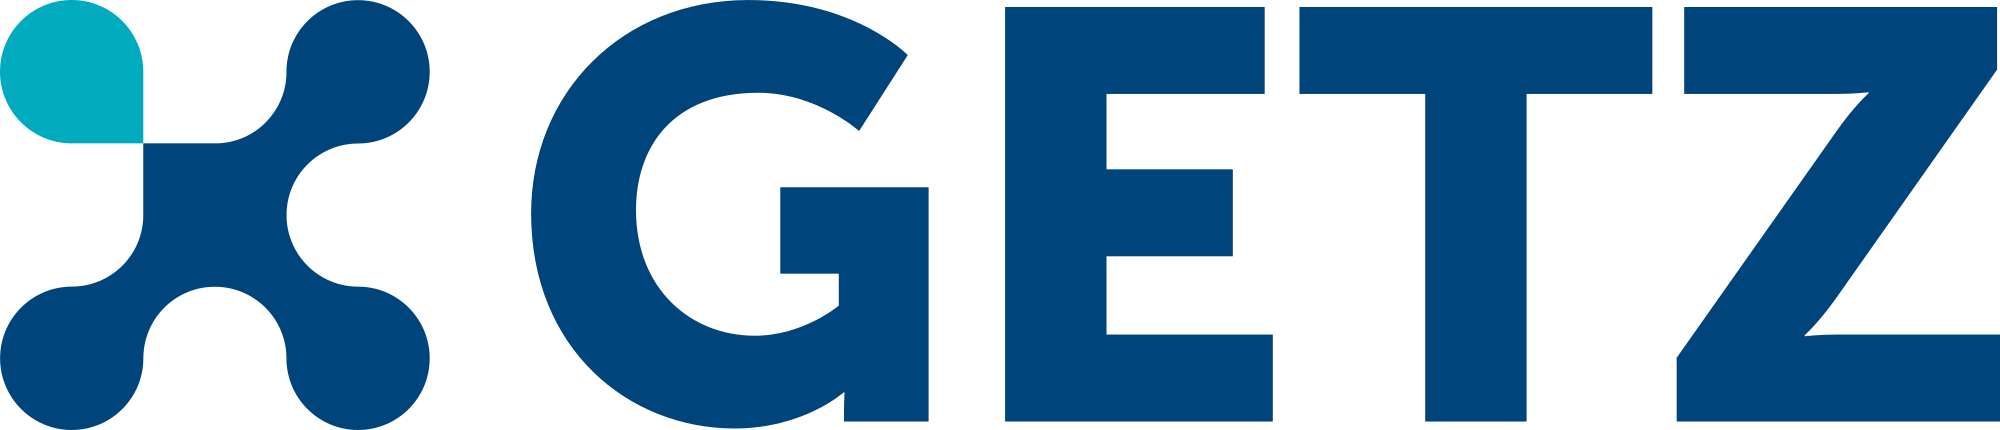 Getz logo 2000x430